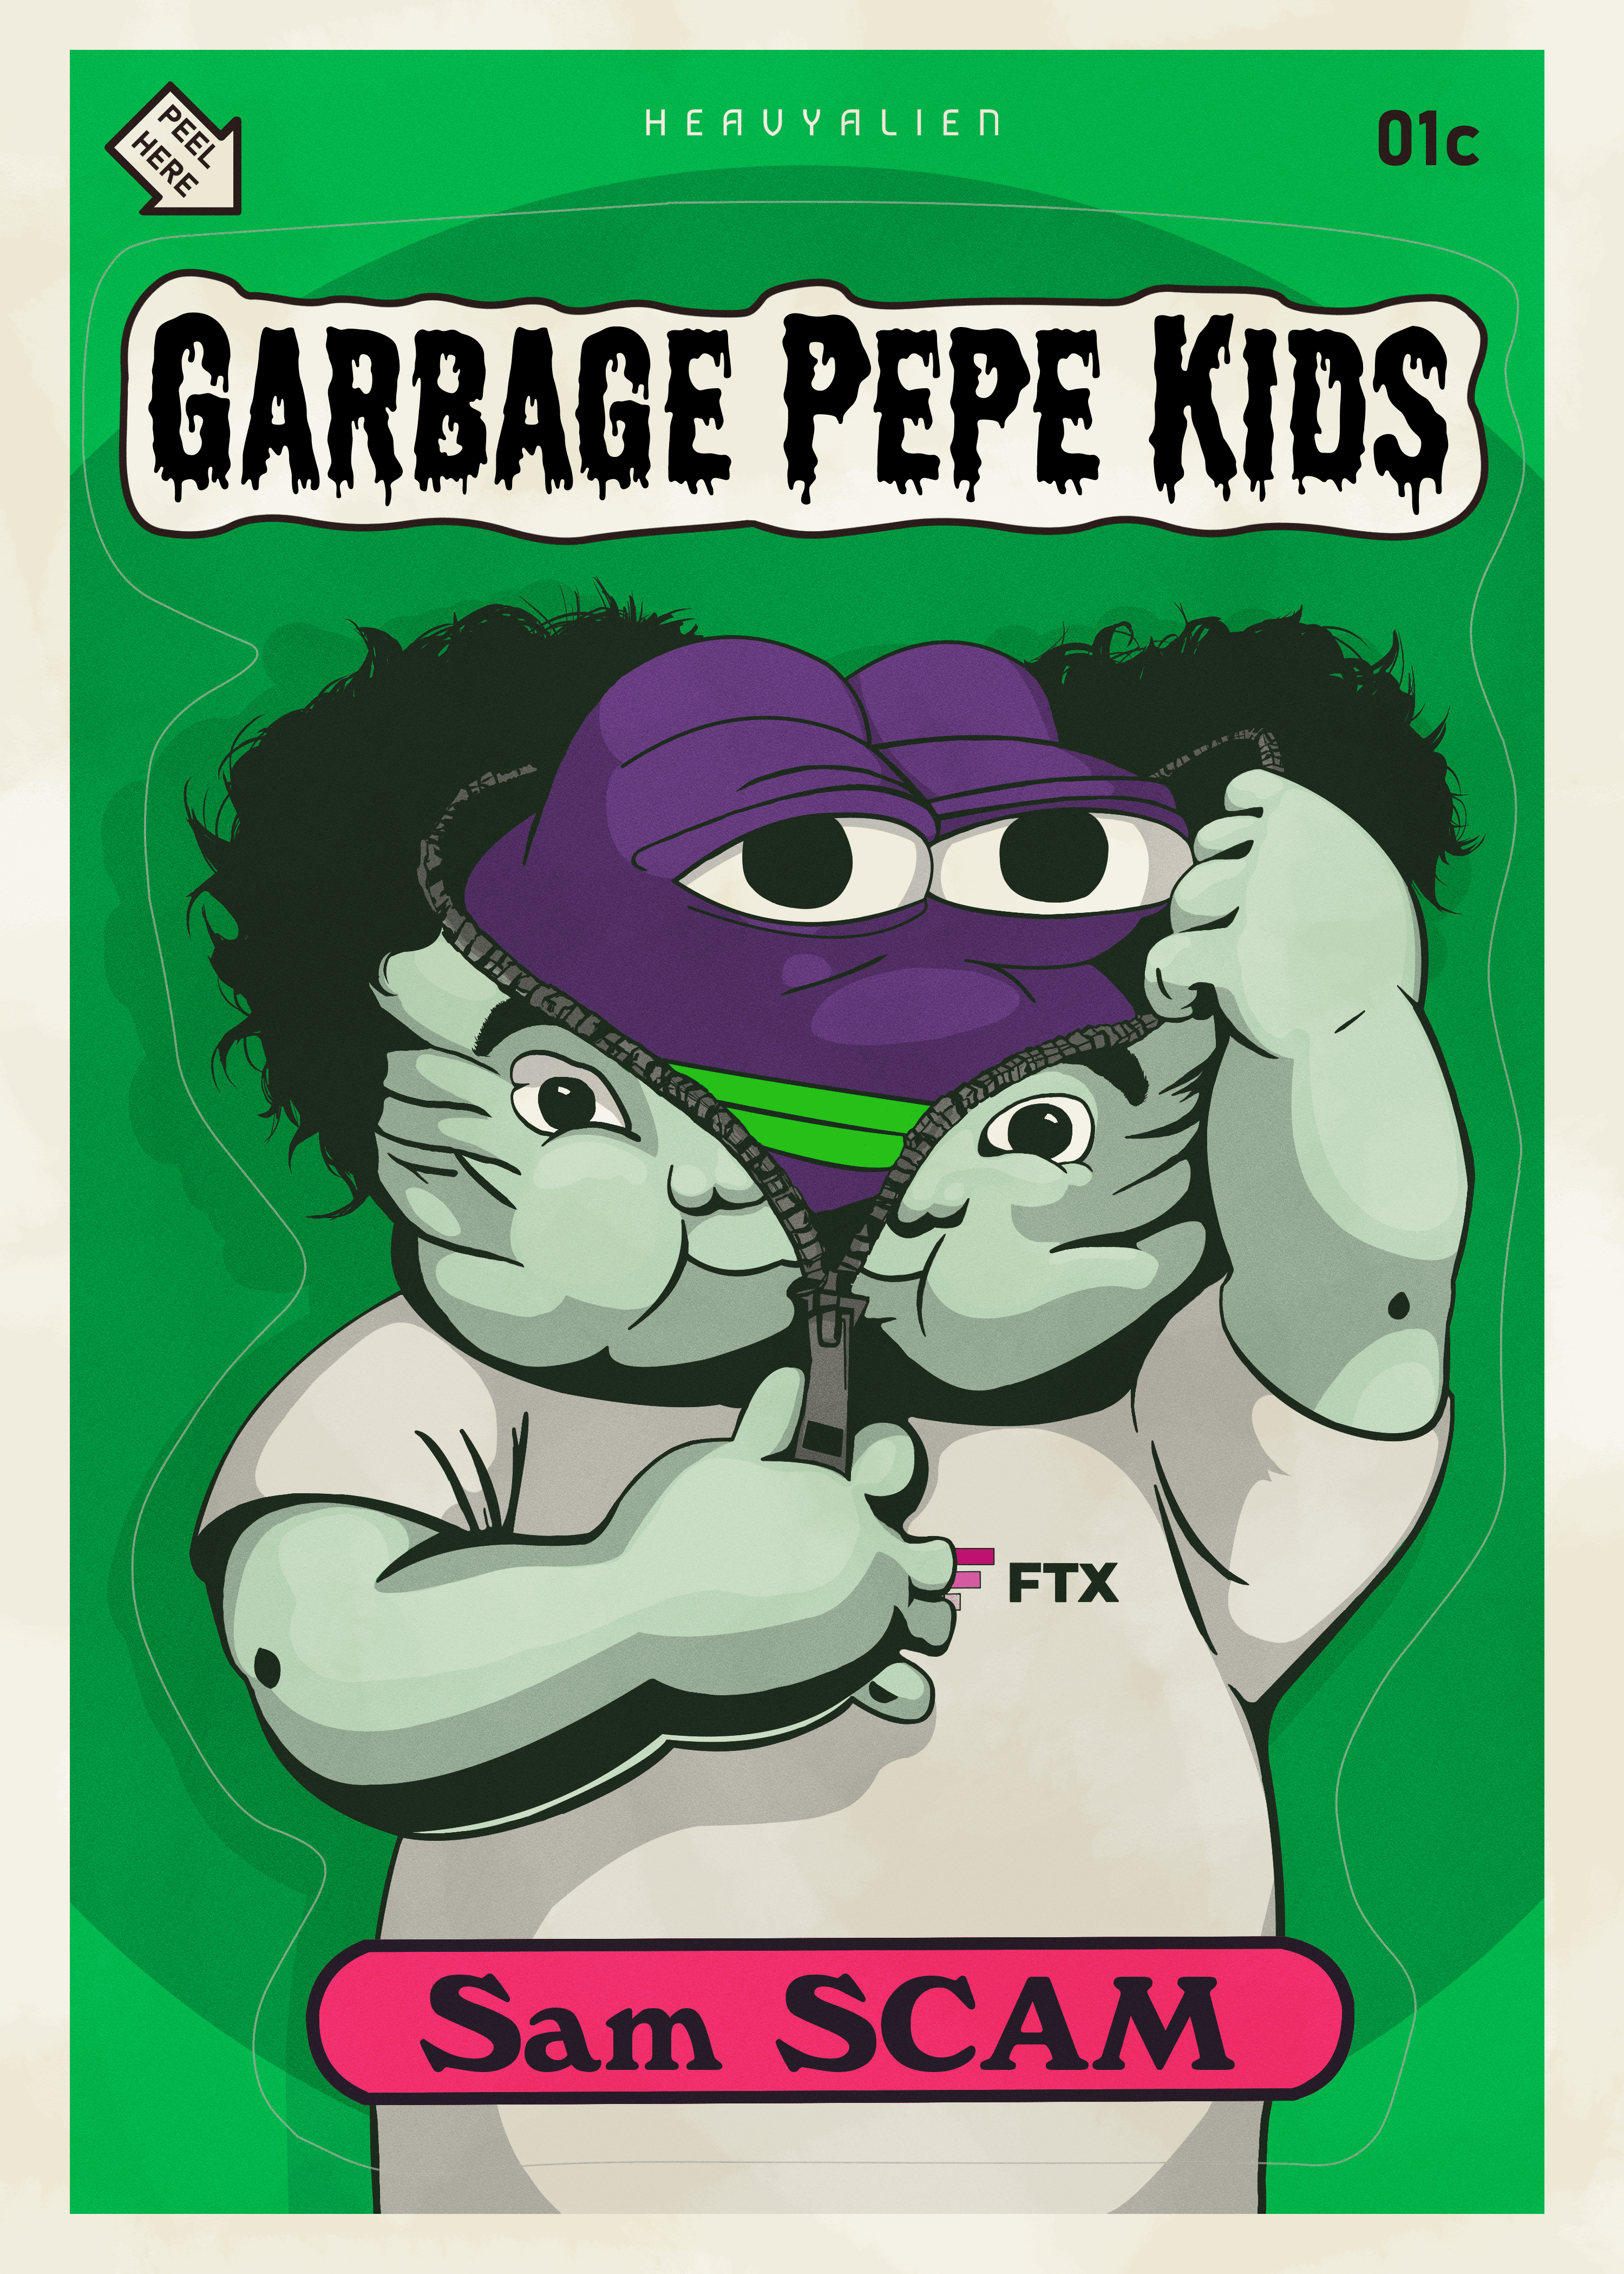 Garbage Pepe Kids #01c - Sam Scam